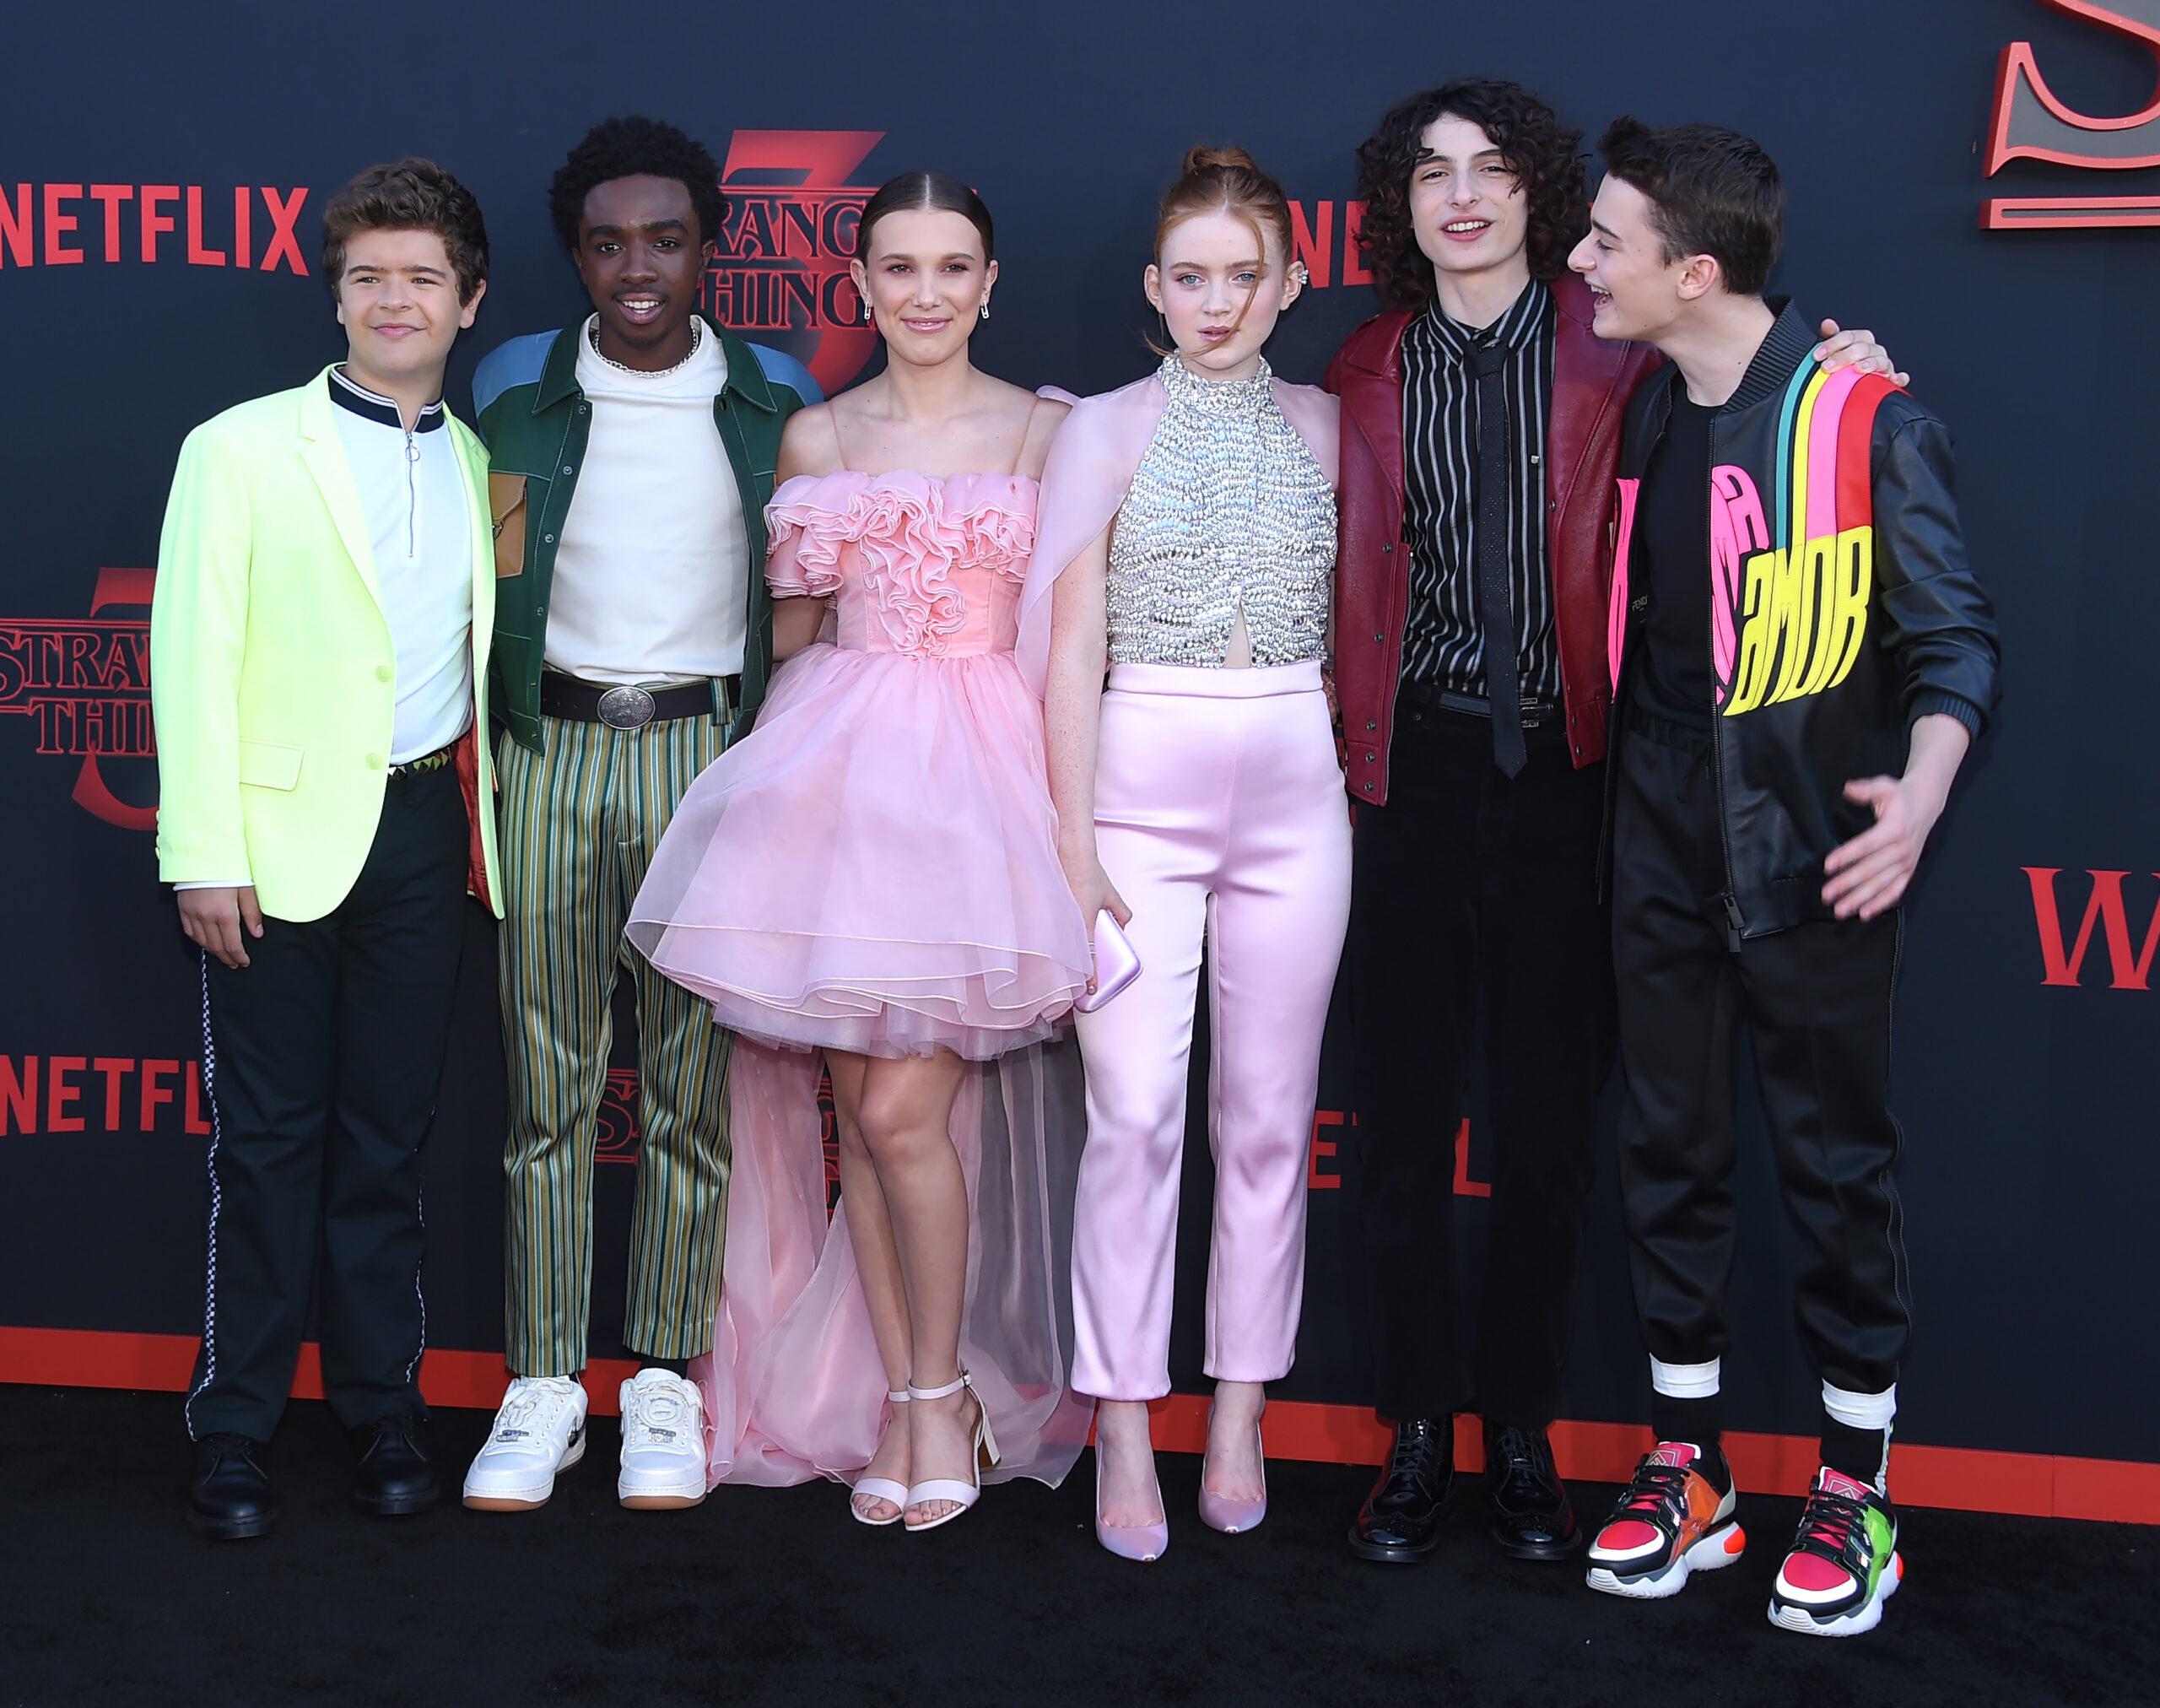 Netflix's 'Stranger Things' Season 3 Premiere